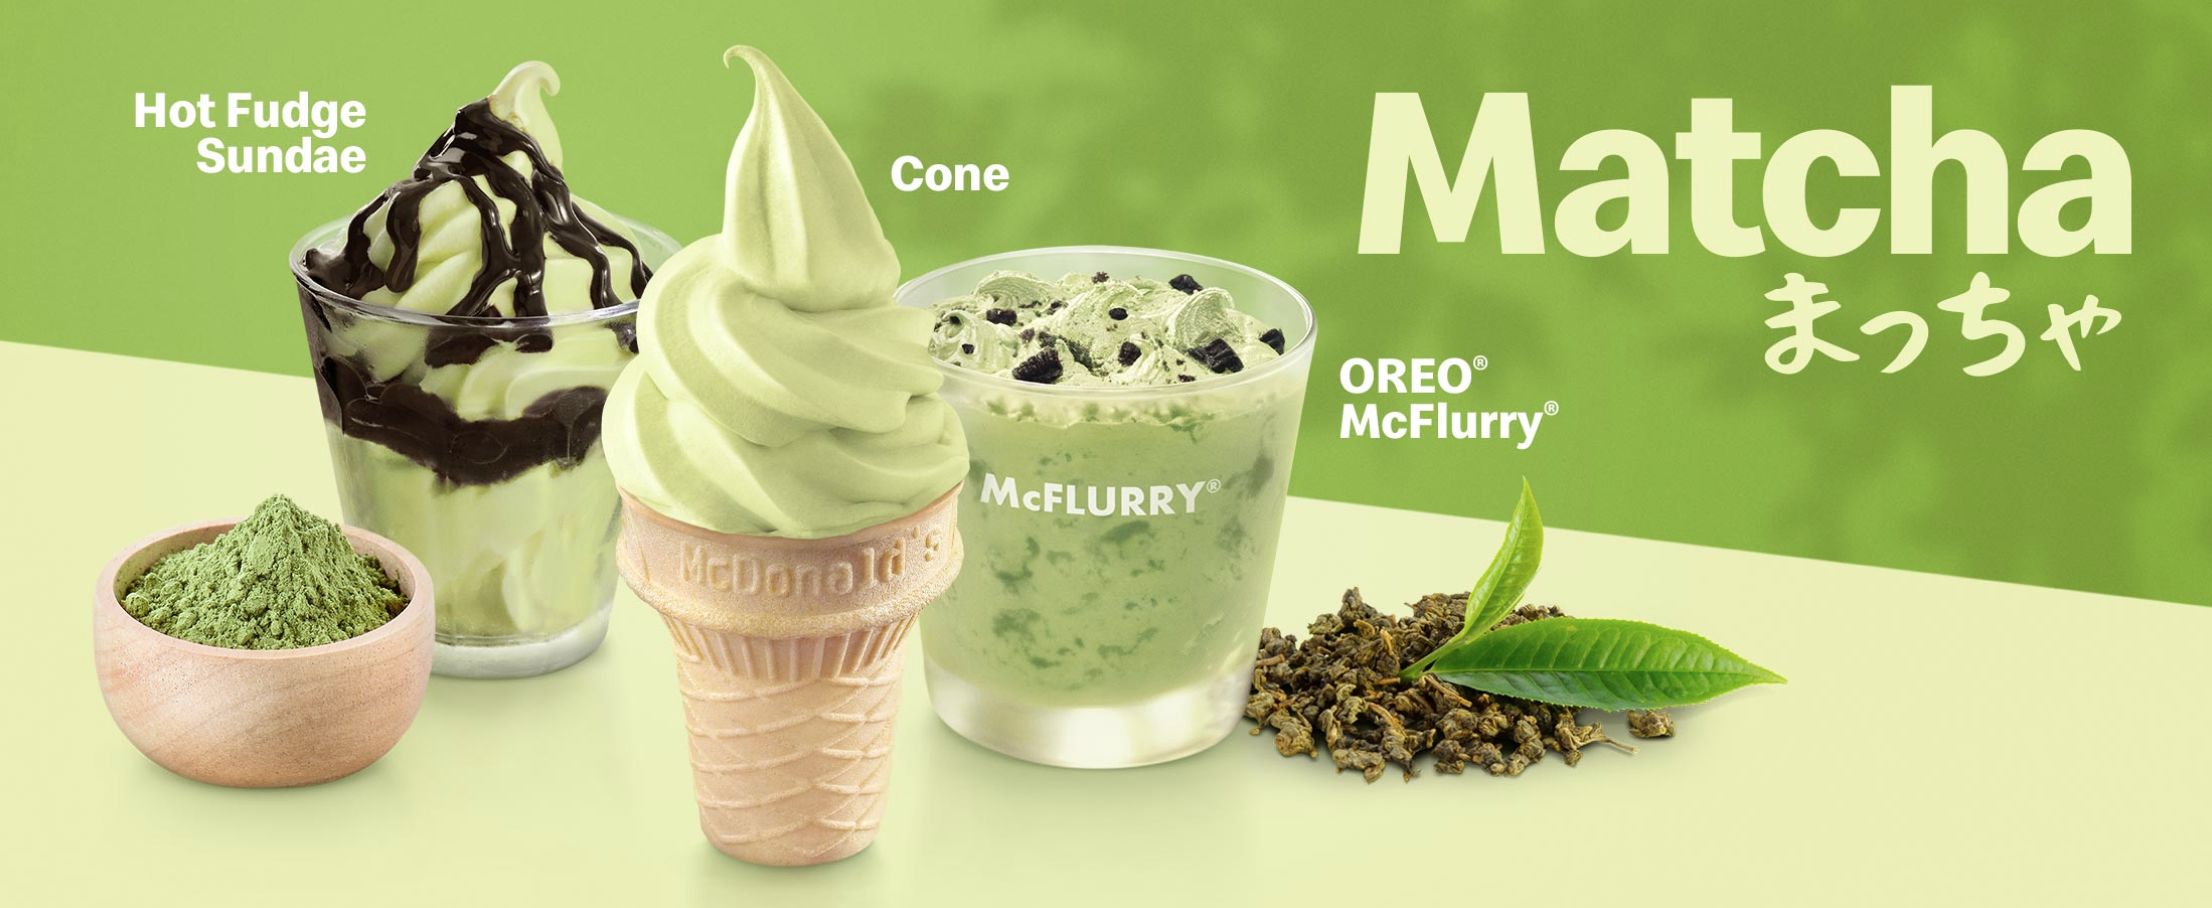 mcdonald's matcha ice cream